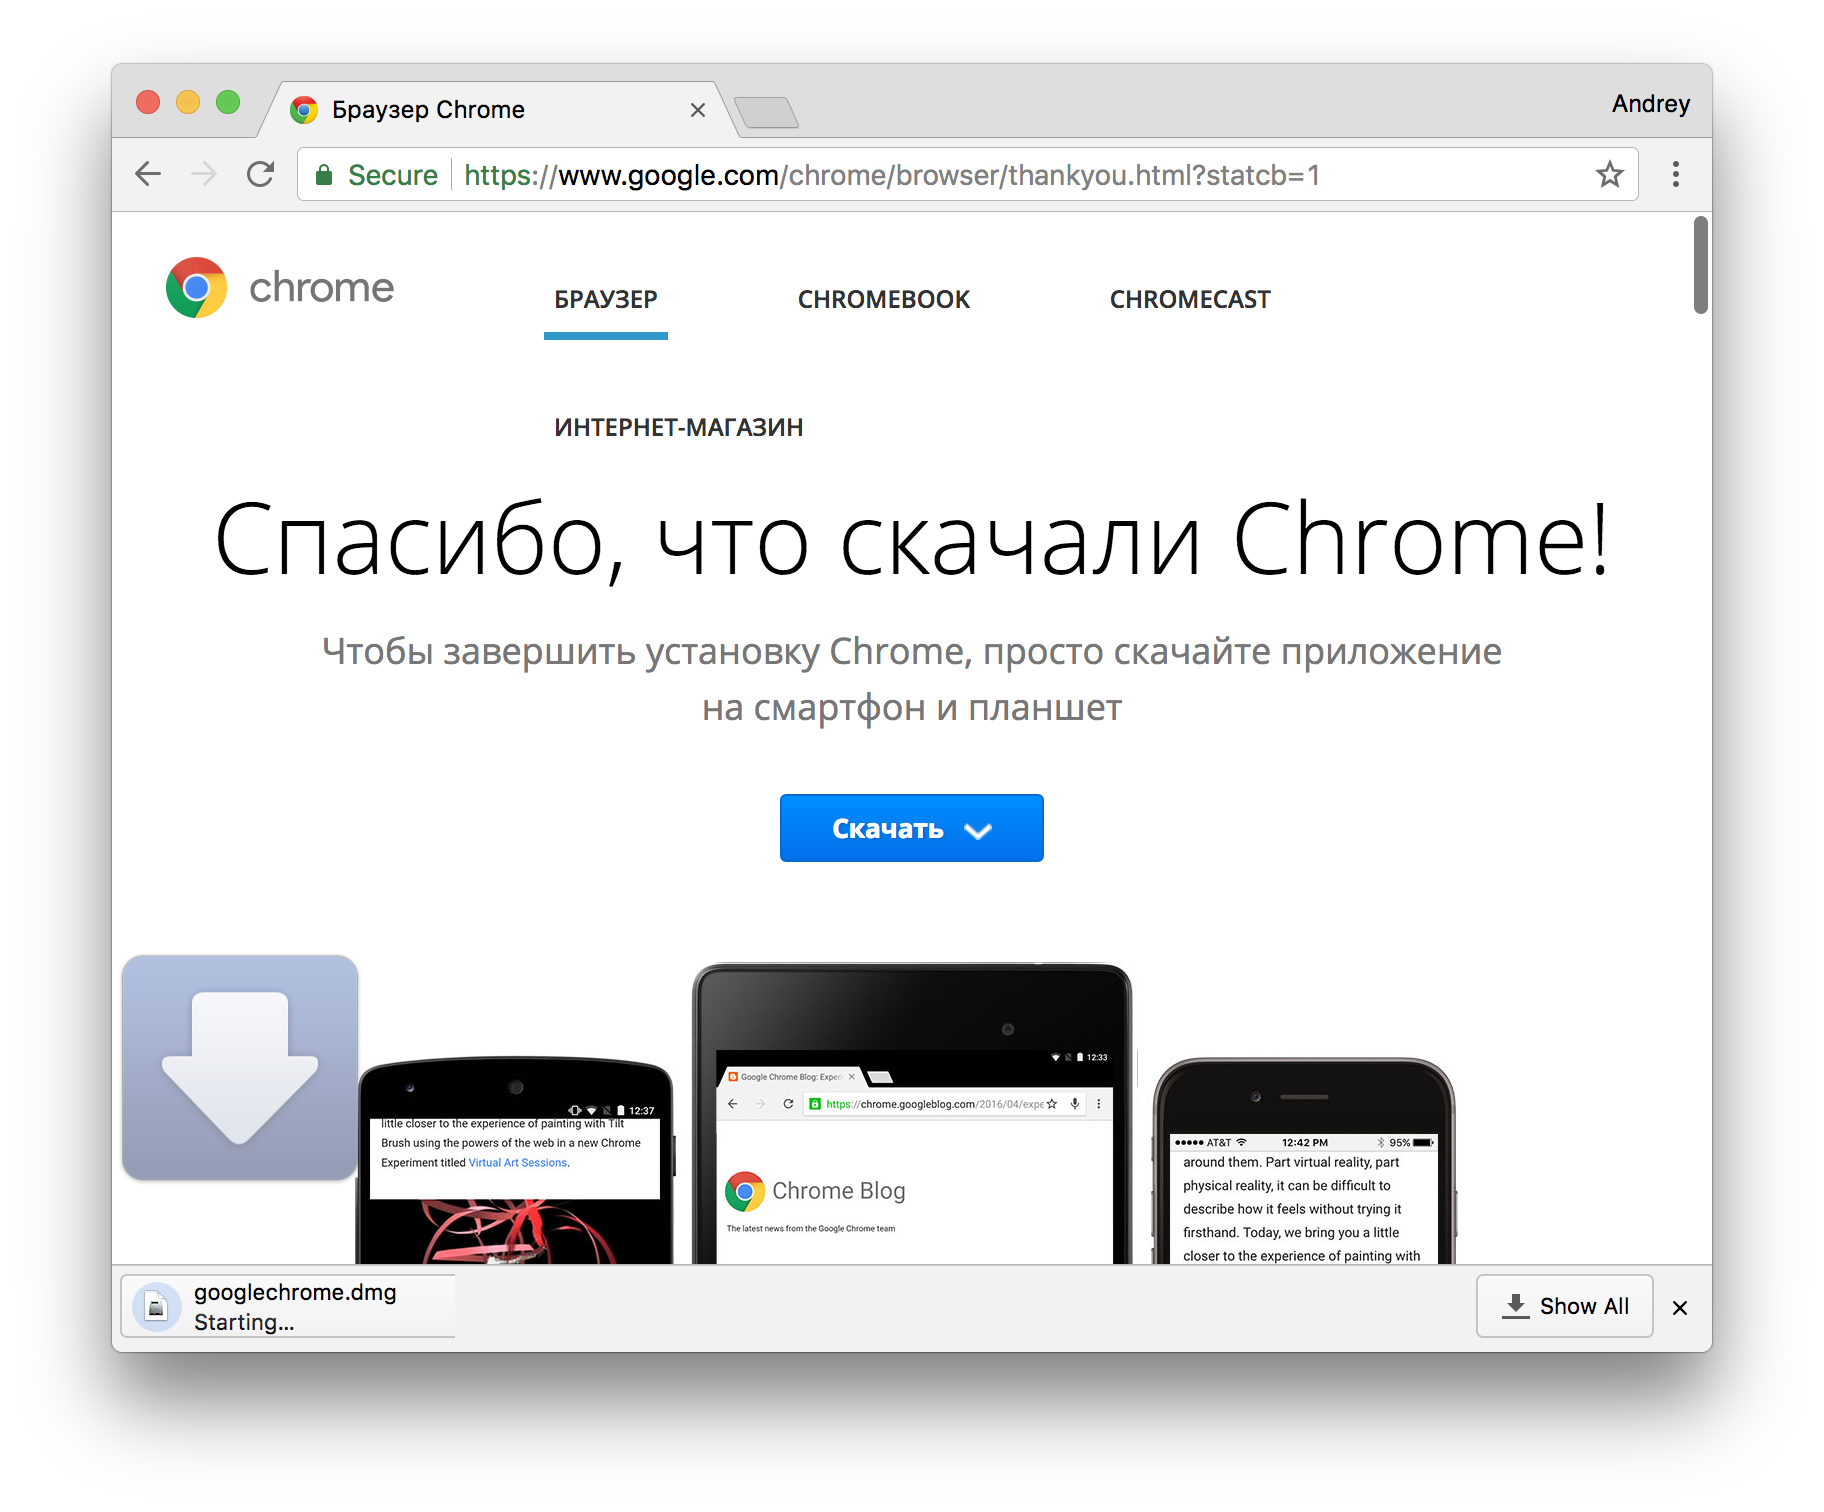 Chrome download